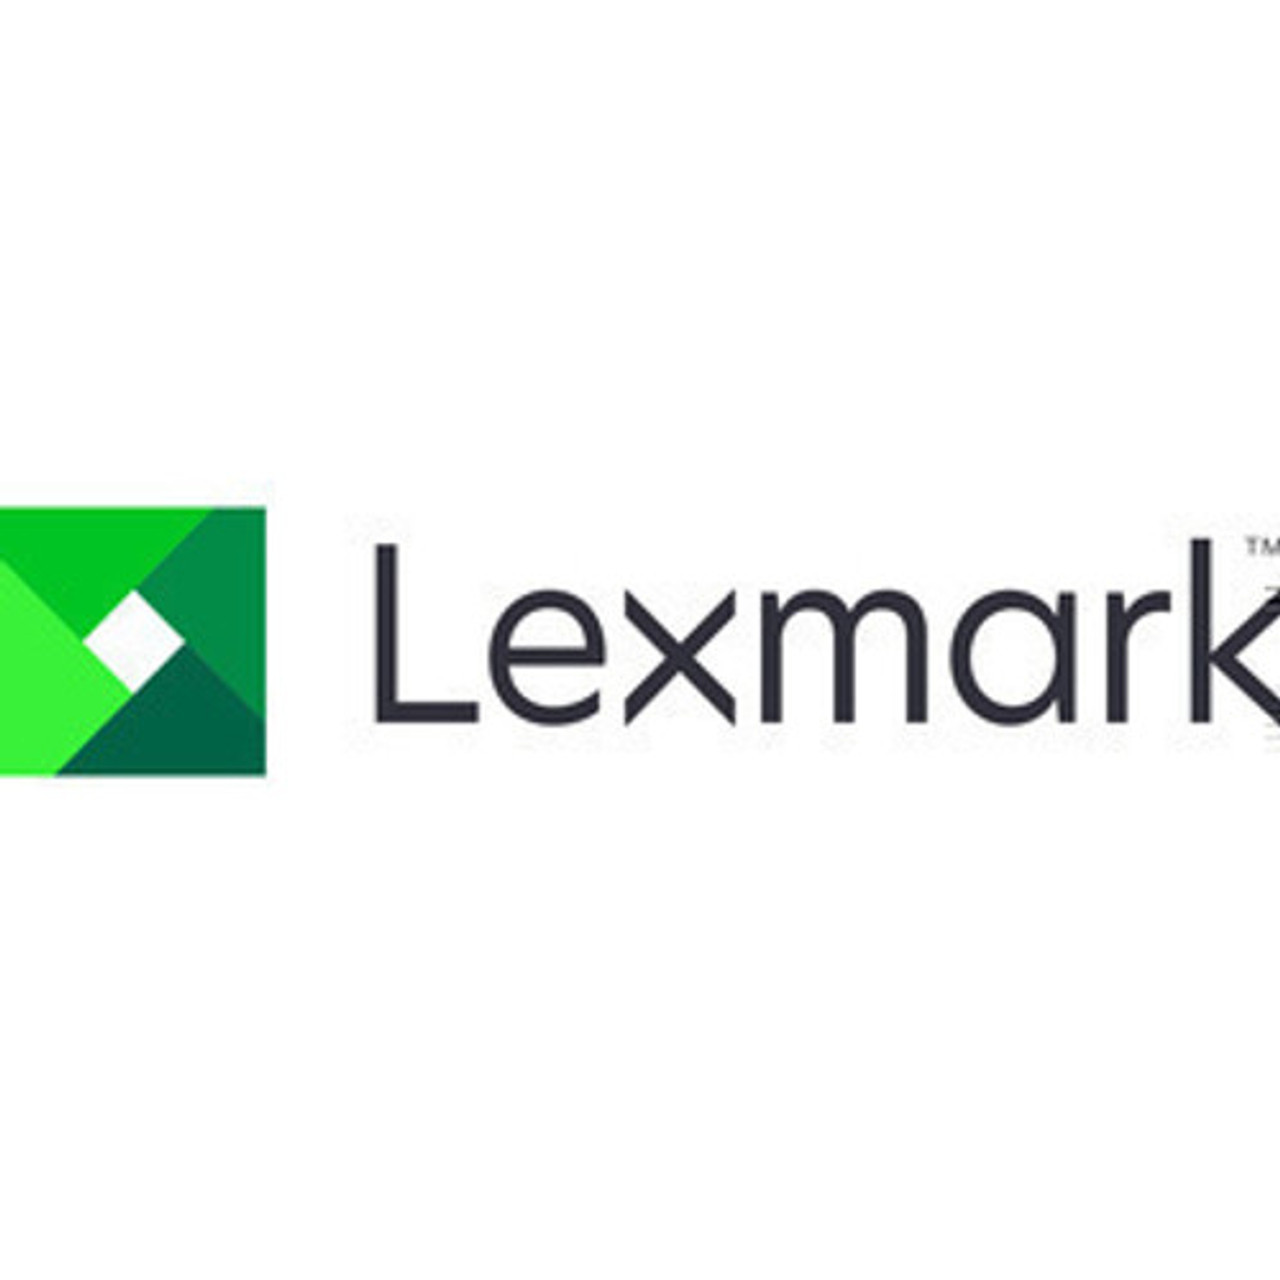 Lexmark 1 YEAR ONSITE REPAIR - POST WARRANTY - MX431 - 2372088